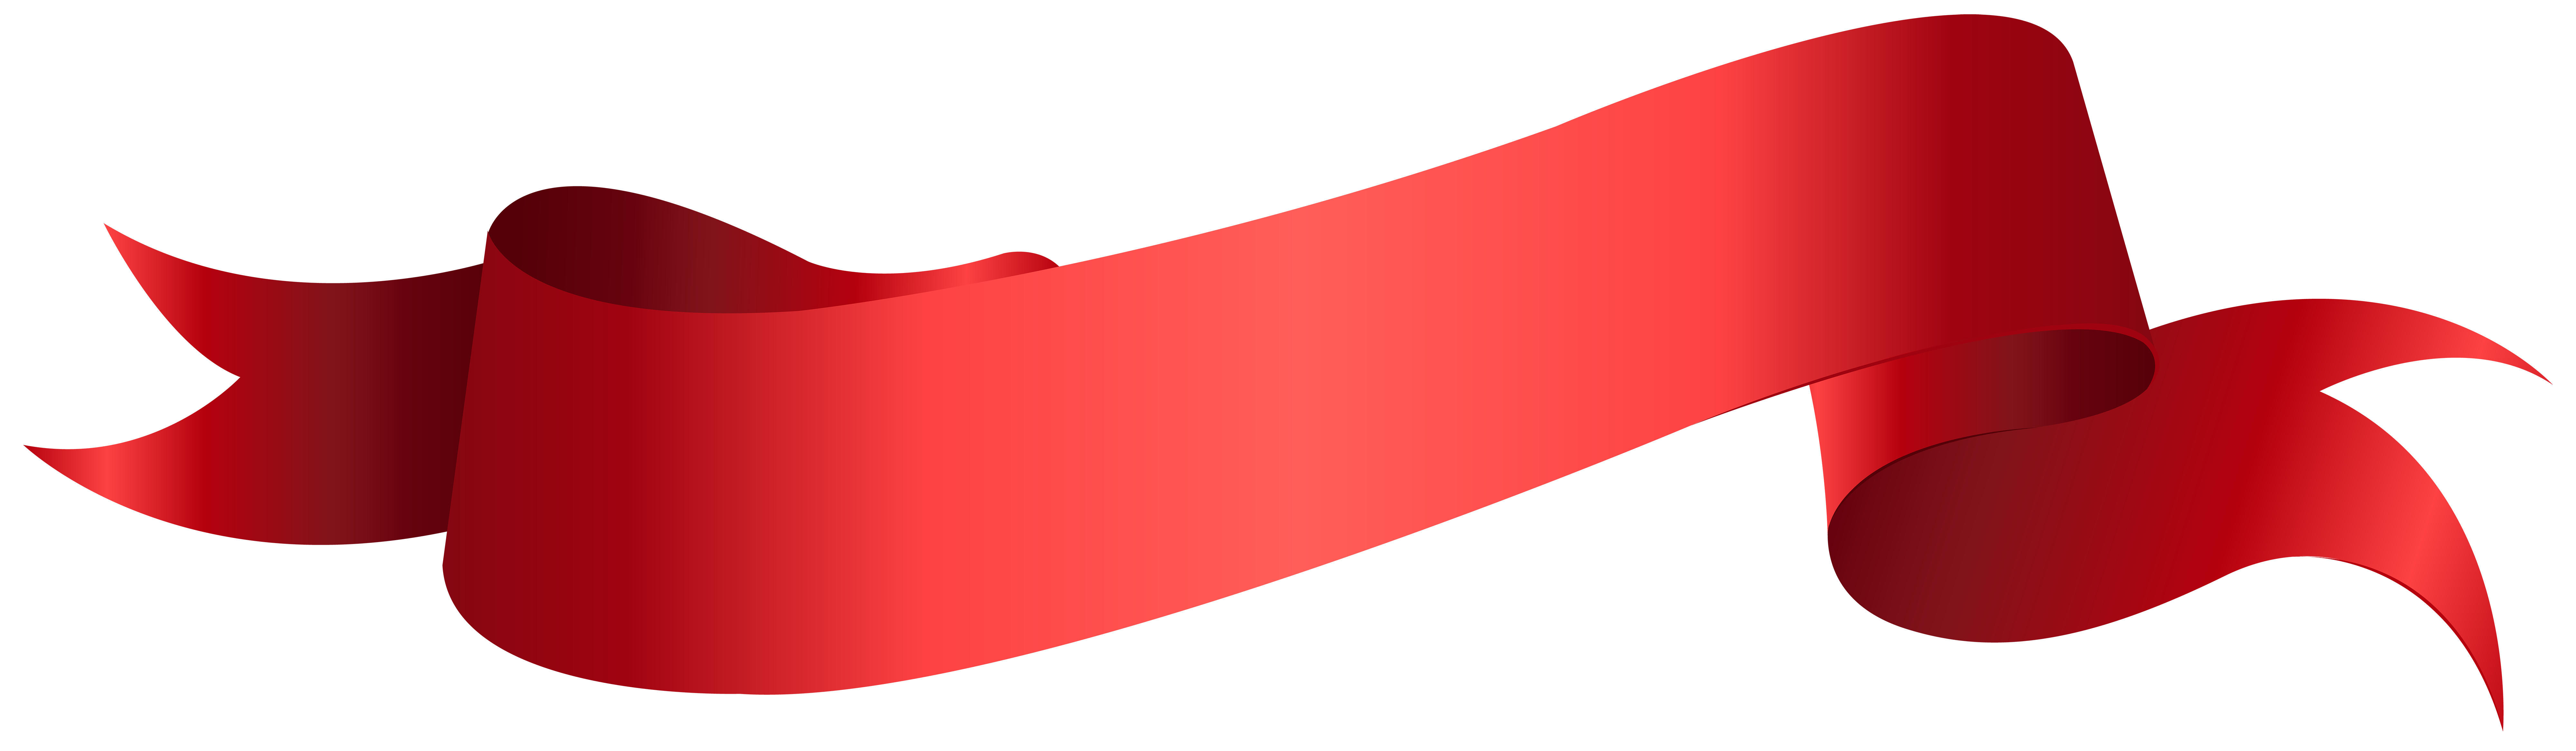 Red Ribbon Banner Png Hd Png Svg Clip Art For Web Download Clip Art - Riset